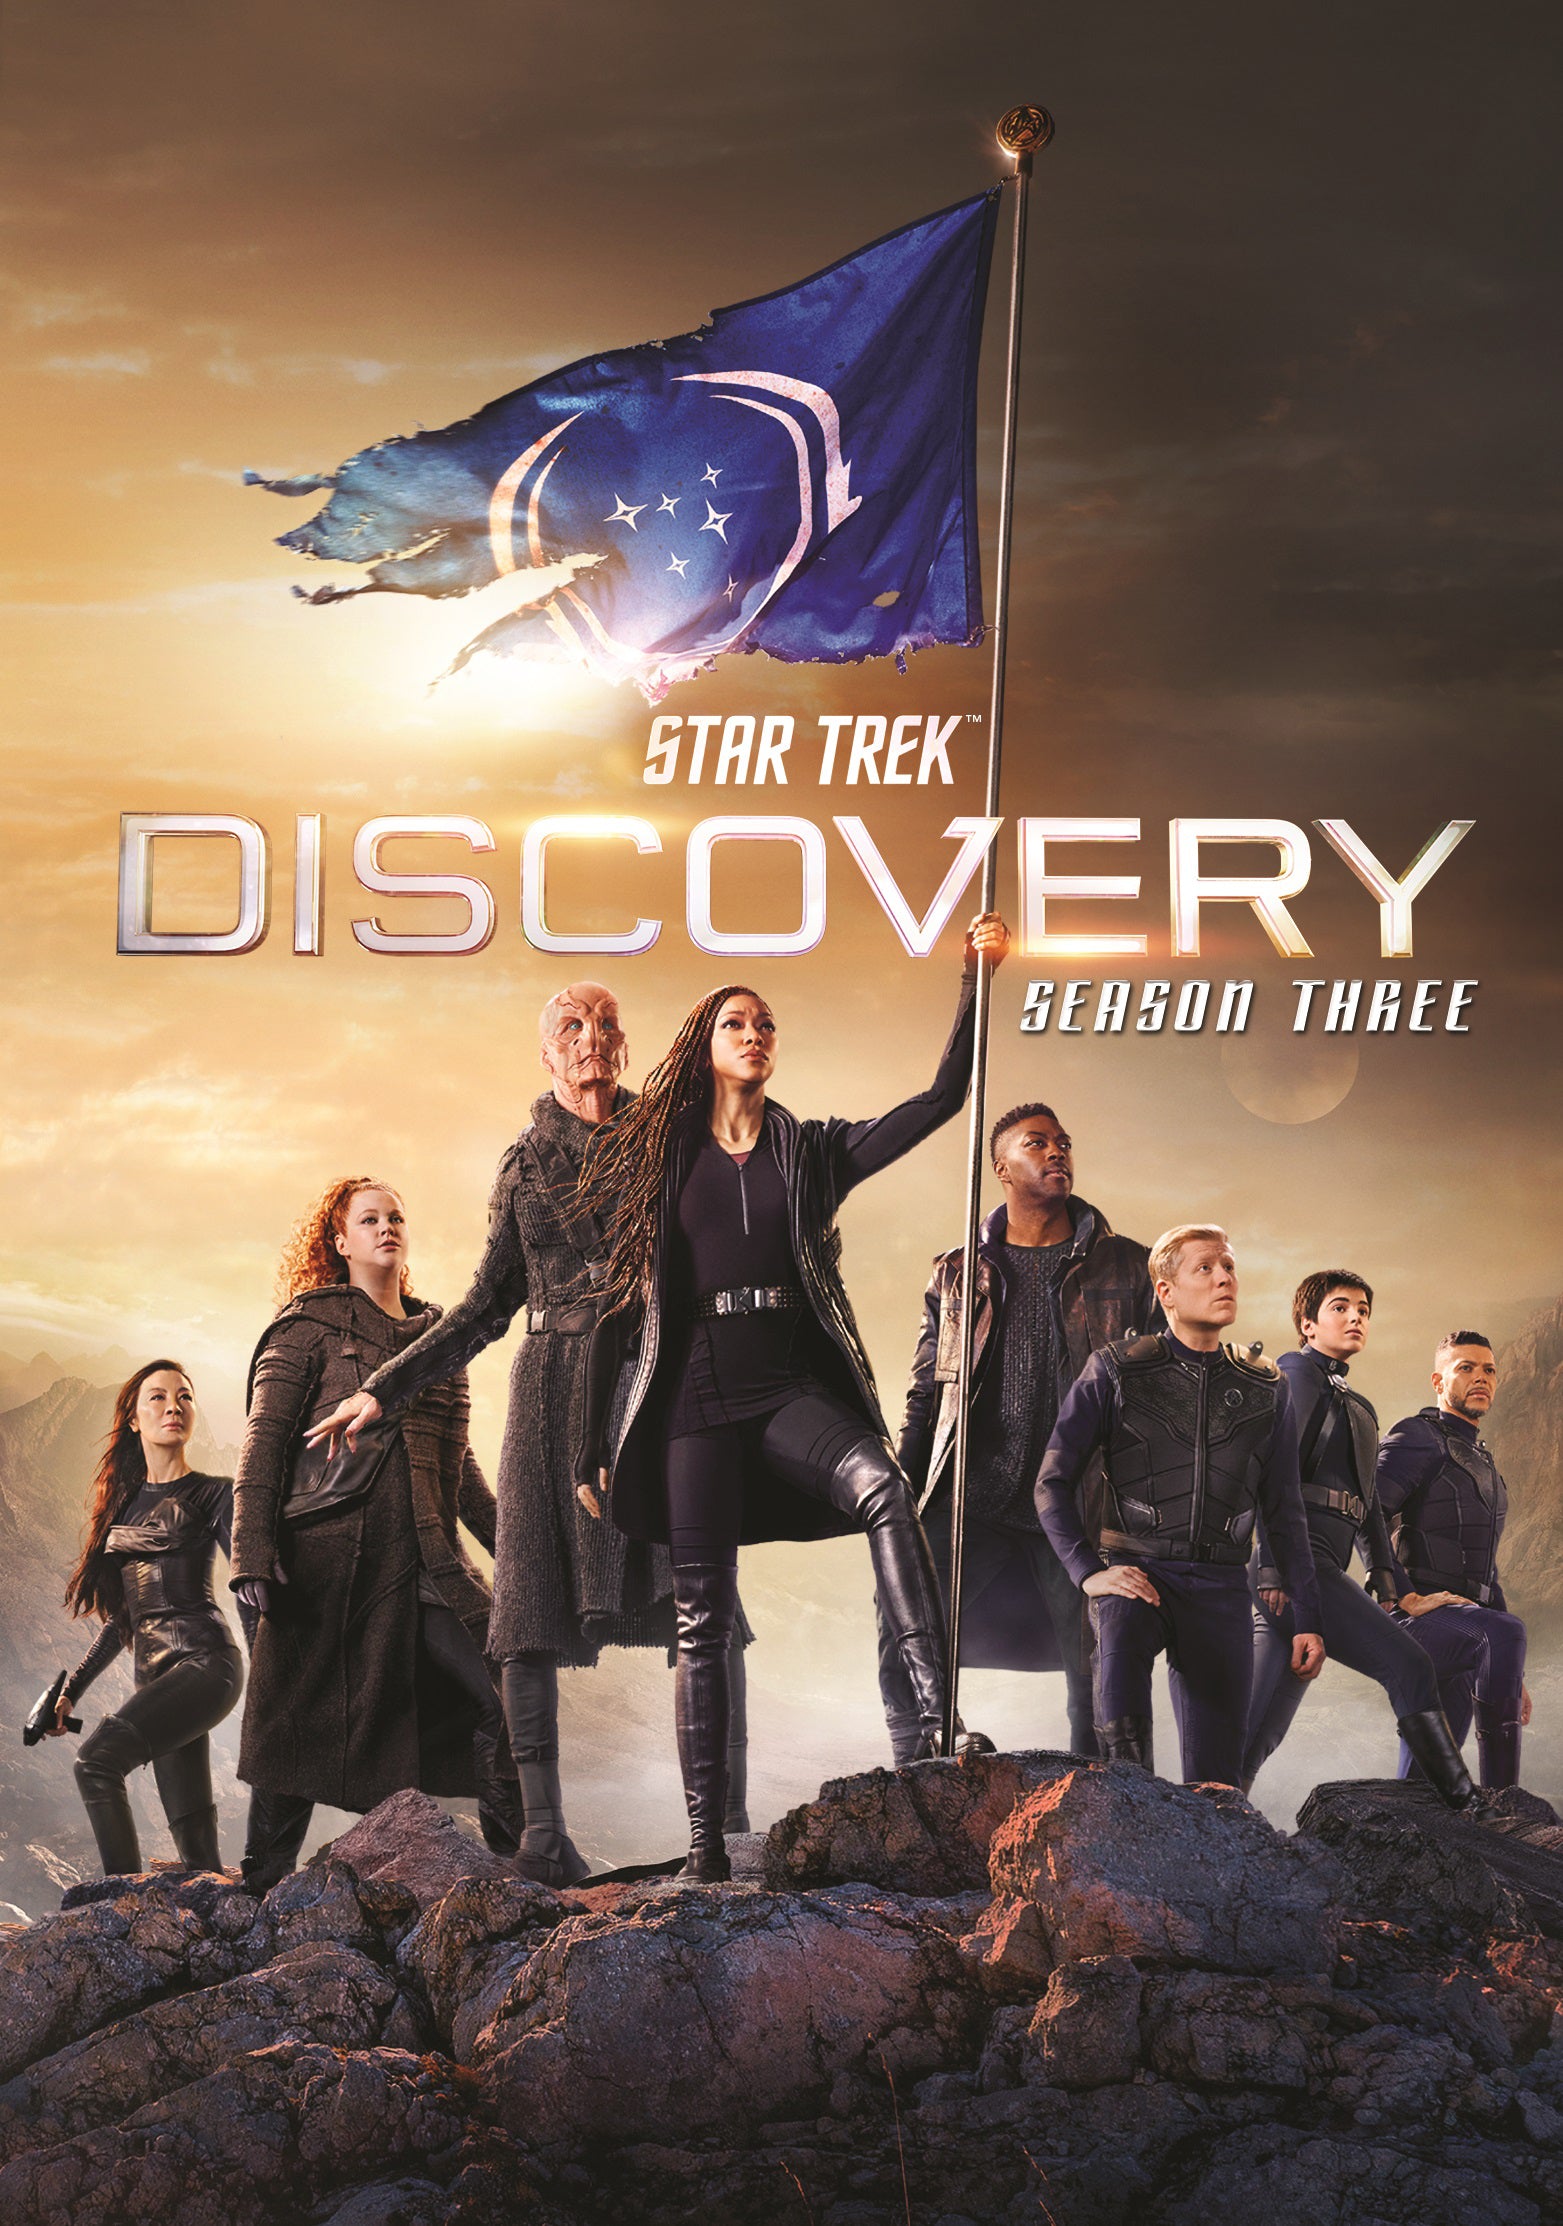 Star Trek: Discovery - Season Three cover art